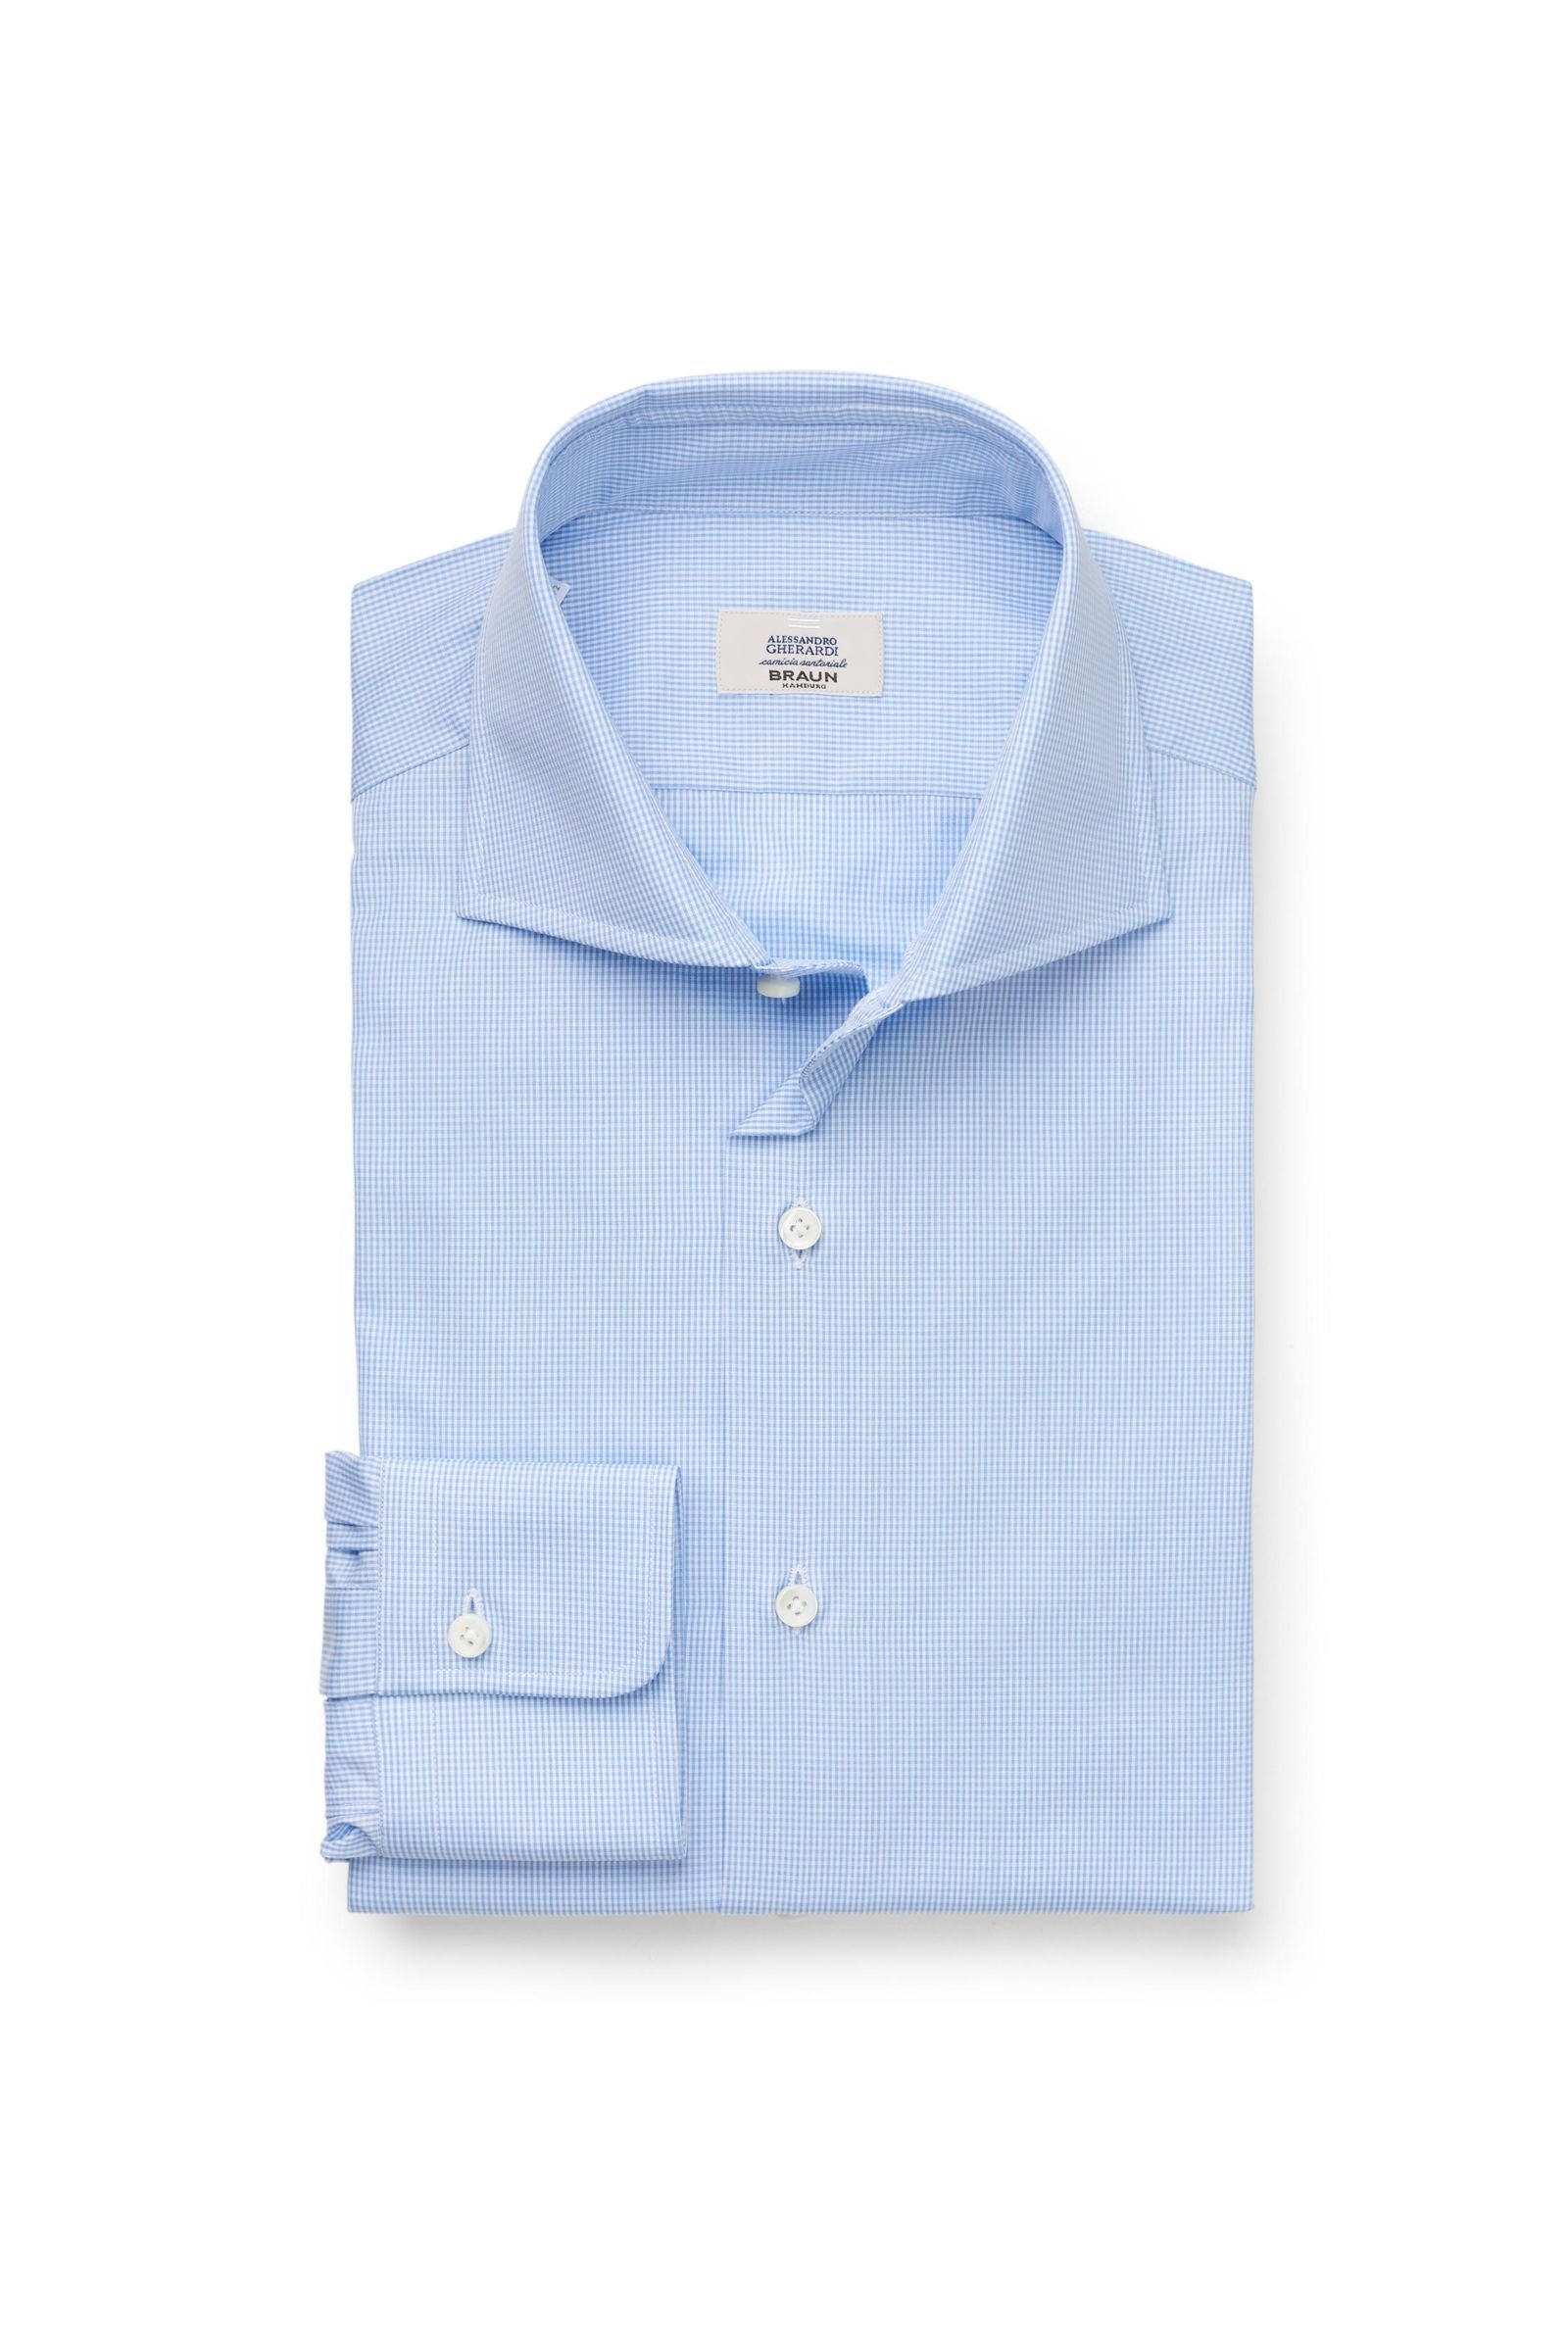 Business shirt shark collar light blue/white checked